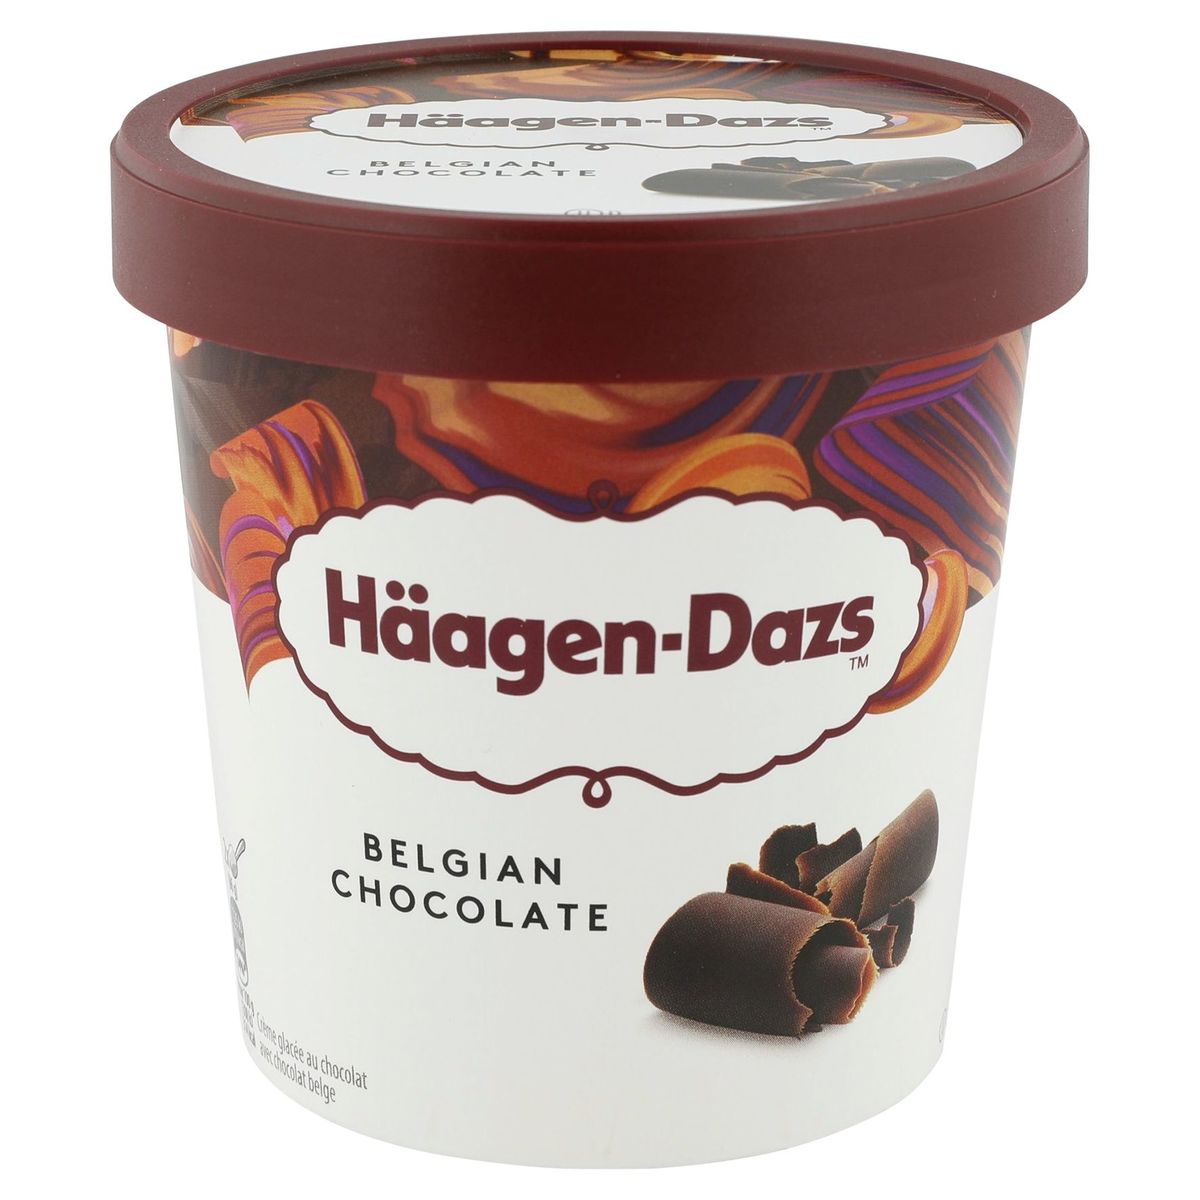 Häagen-Dazs Crème glacée Belgian Chocolate Pint 460ml